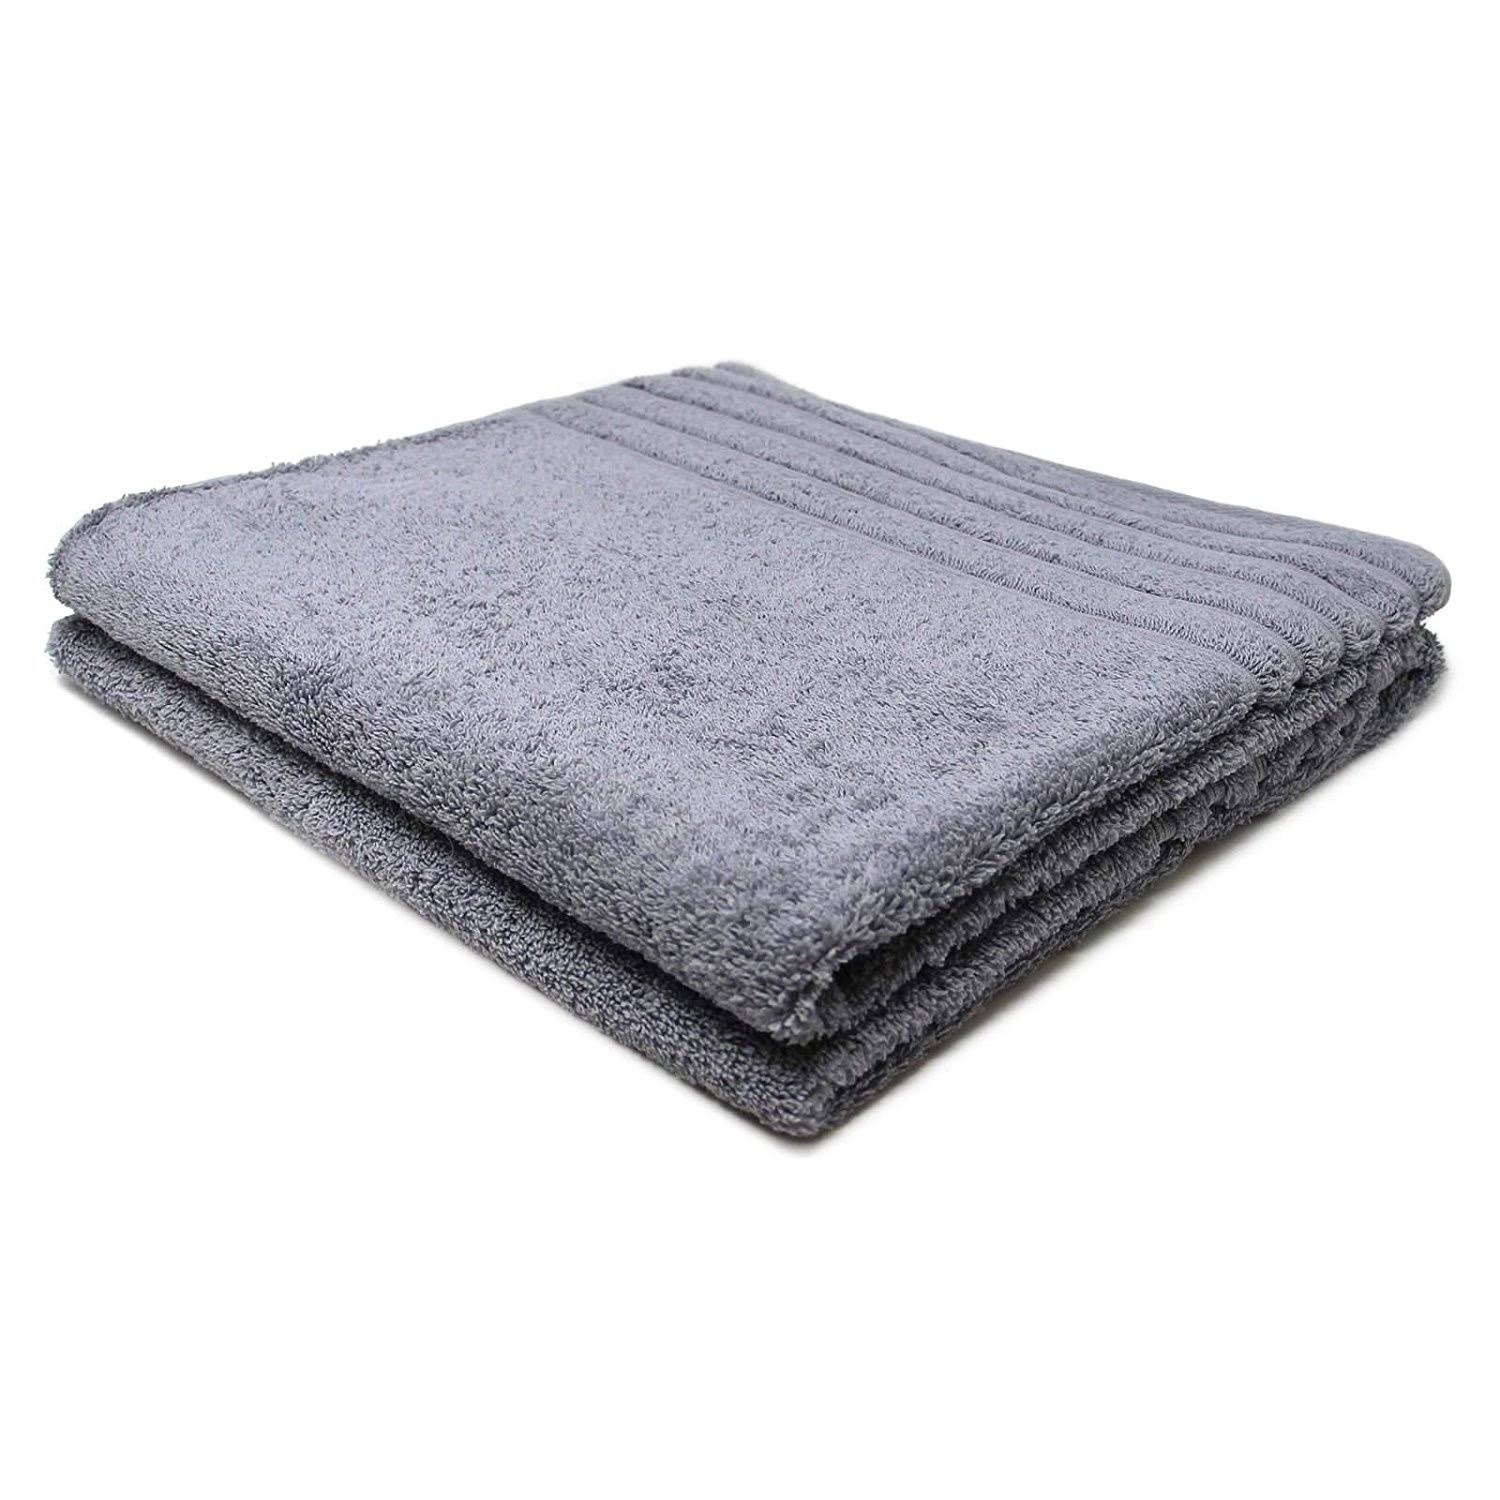 Crieff 100% Portugal Cotton Towel Luxury Soft 580gsm Bathroom Towels 